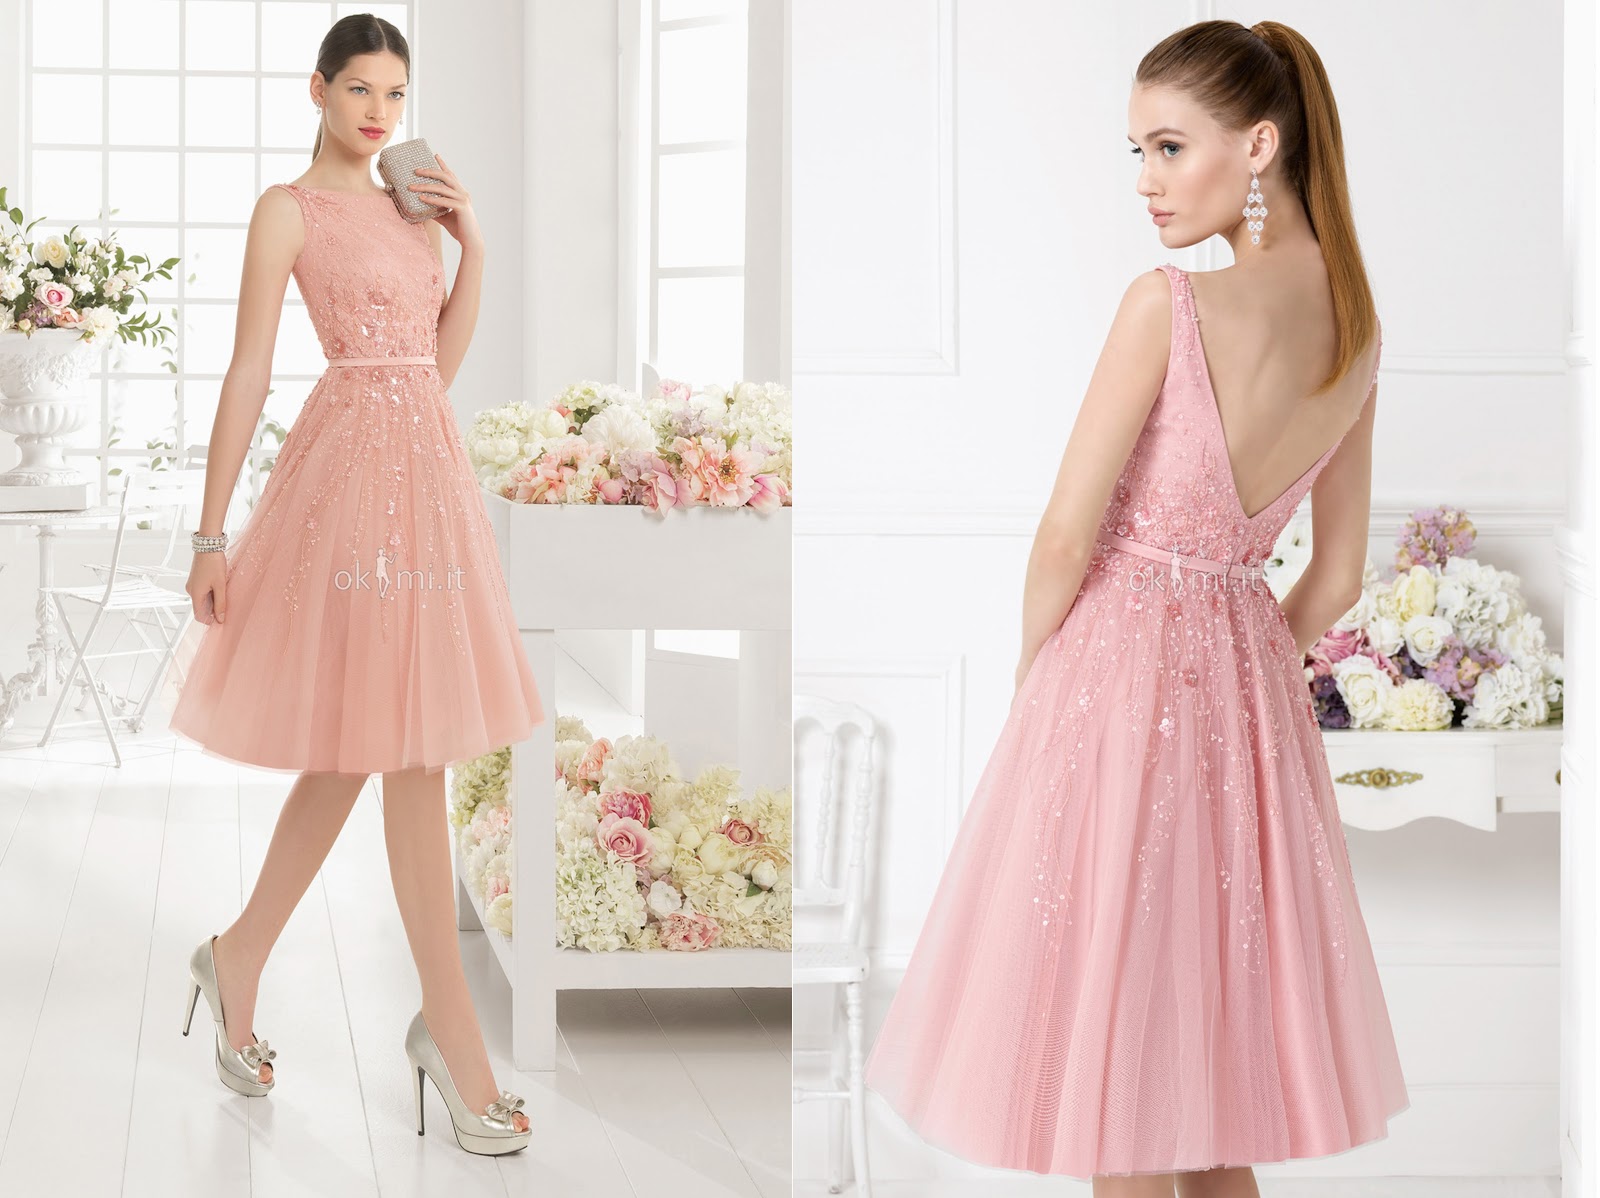 fashion style blogger outfit ootd italian girl italy trend vogue glamour pescara cocktail wedding elegant evening dress okmi